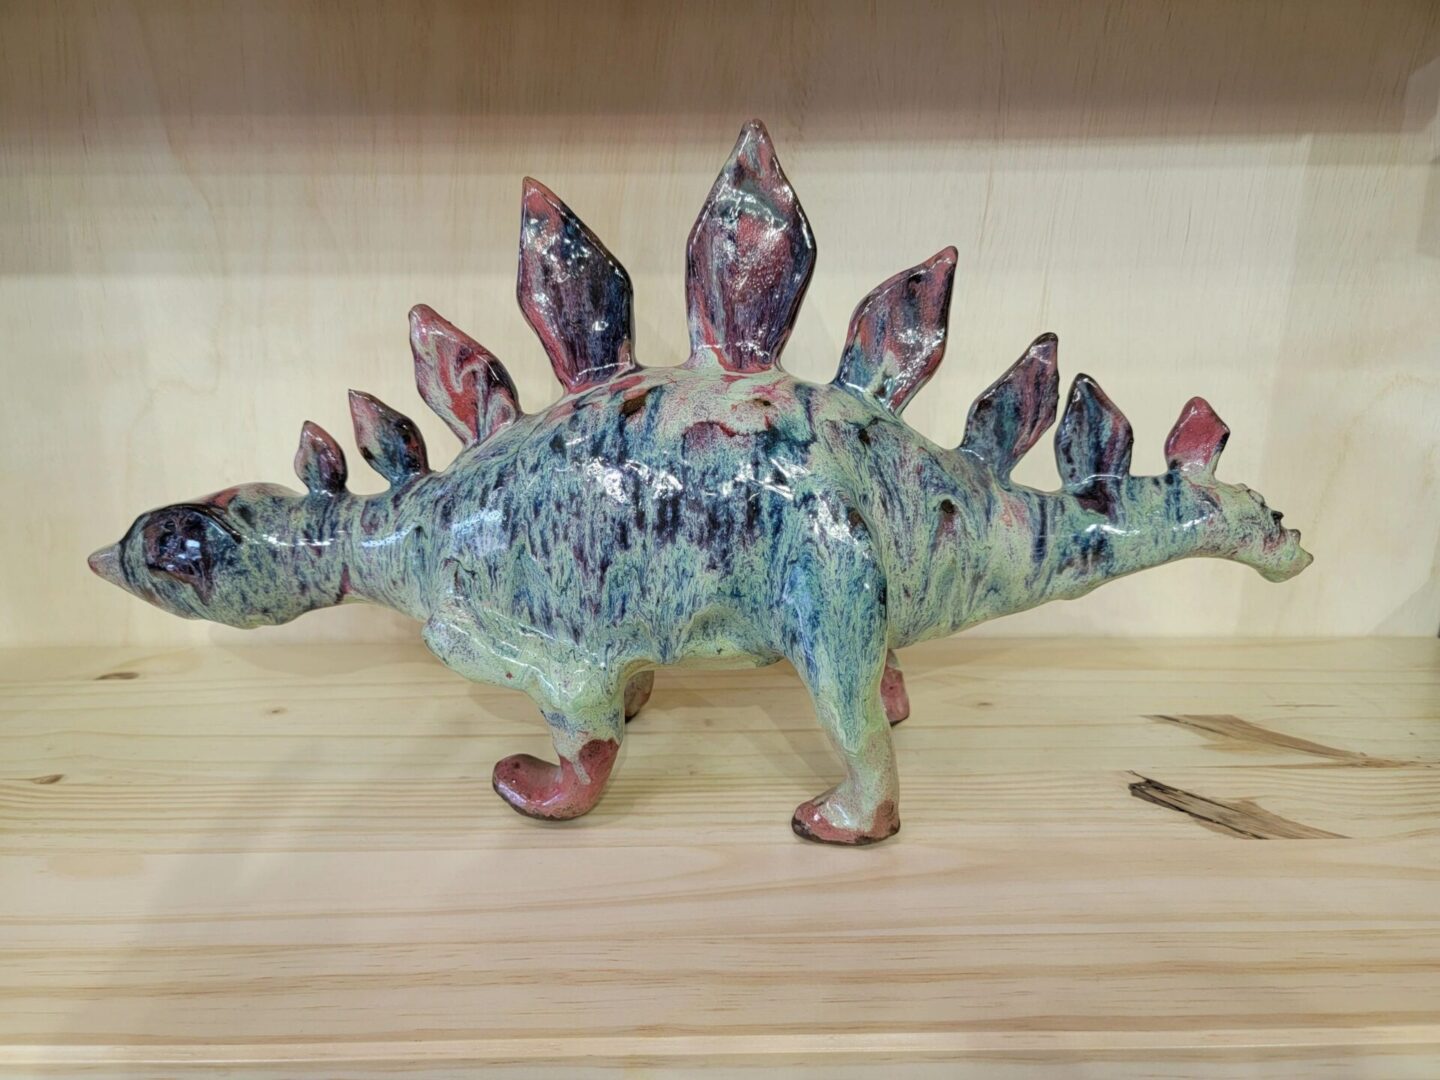 A ceramic stegosaurus figurine sitting on top of a table.